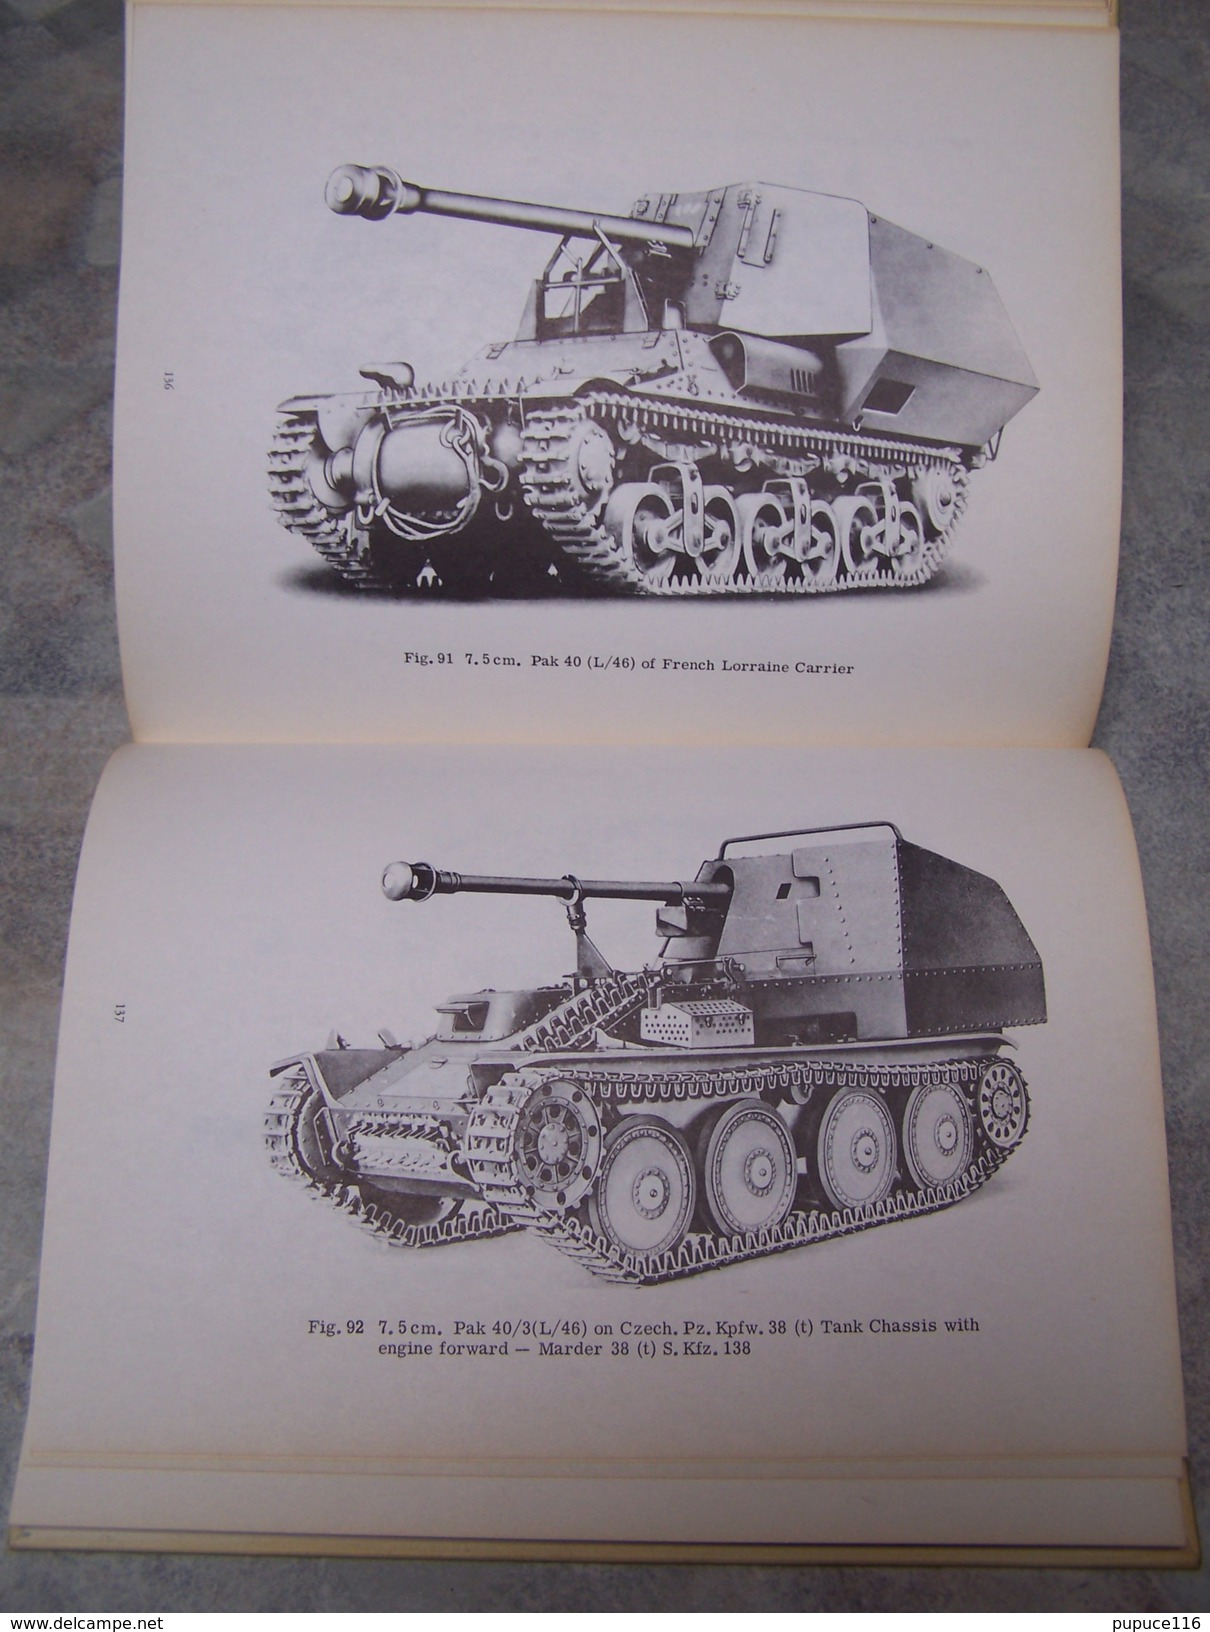 German Tank an Antitank in World War II -  Hoffmann Tantum - 1968